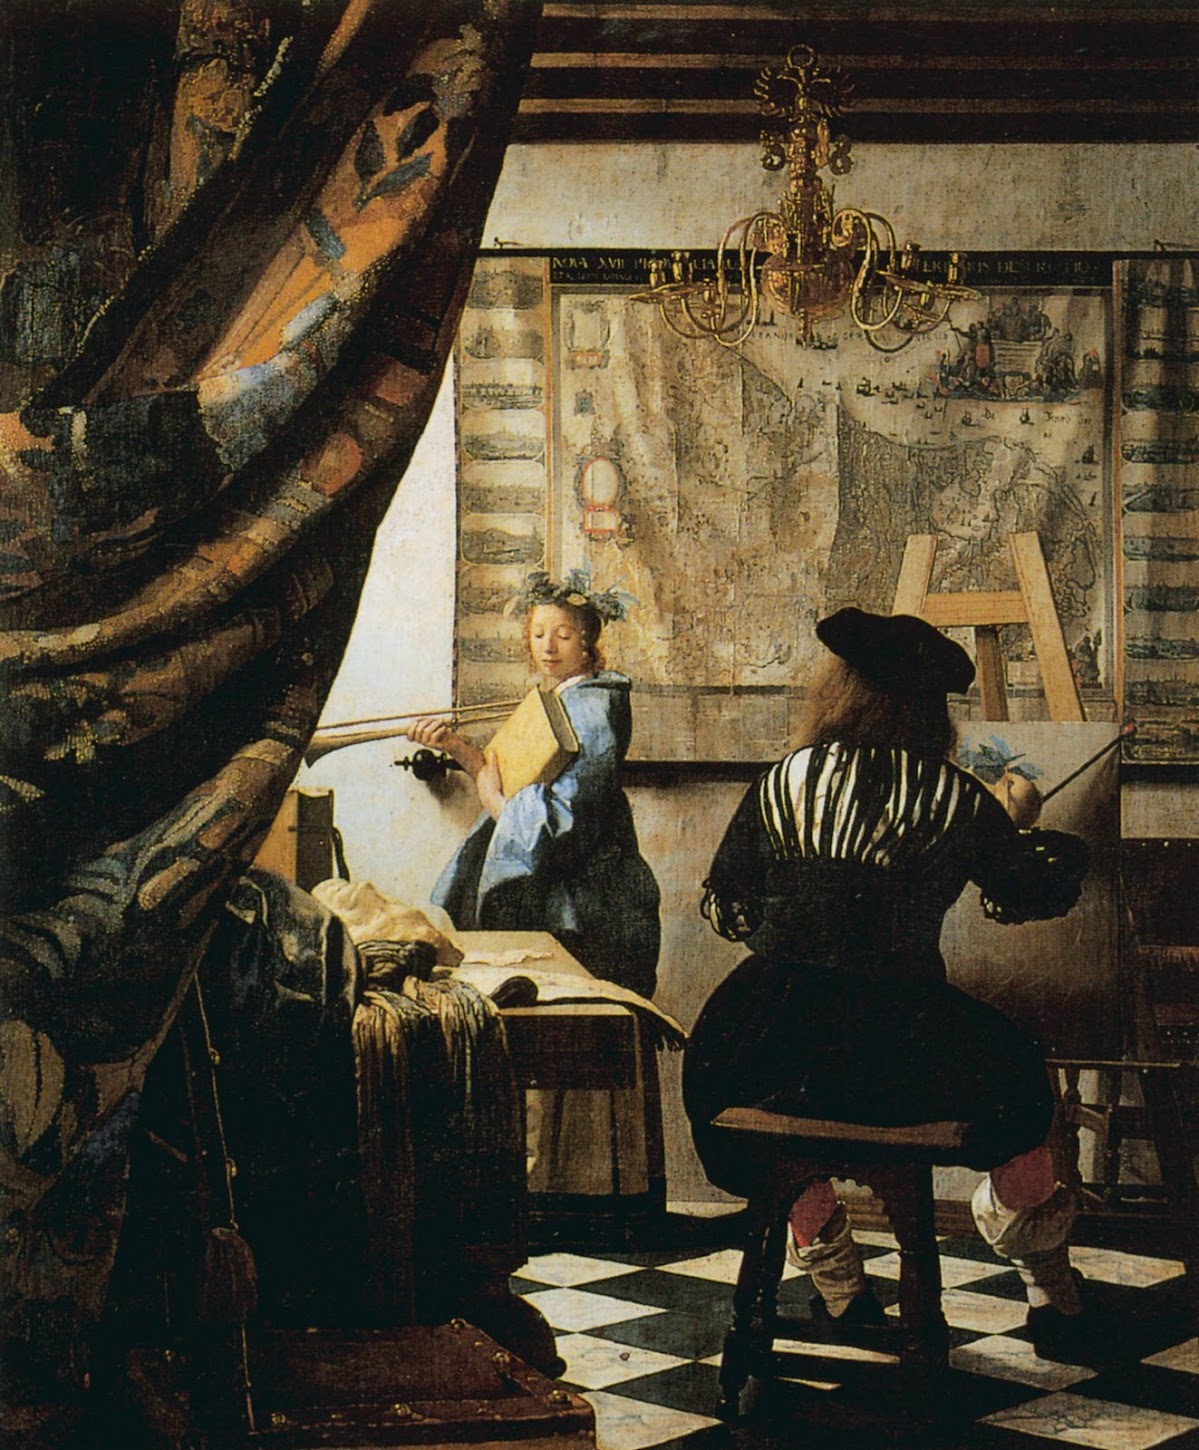 https://blogger.googleusercontent.com/img/b/R29vZ2xl/AVvXsEj16oflaLdDyS2O2dTI37Fp2skAyGG47euUcDbg56RTinJNHSyg9FN8dHTXP7aWXsyhPTbI9FmUWAslSCu3c9VfhzWtFEfT3qedSDfzXHMNUNXLPzfTPNF91lvDhSgxtRcUNJQsnwhOySY/s1450/Vermeer_L_Atelier_du_Peintre_1670.jpg